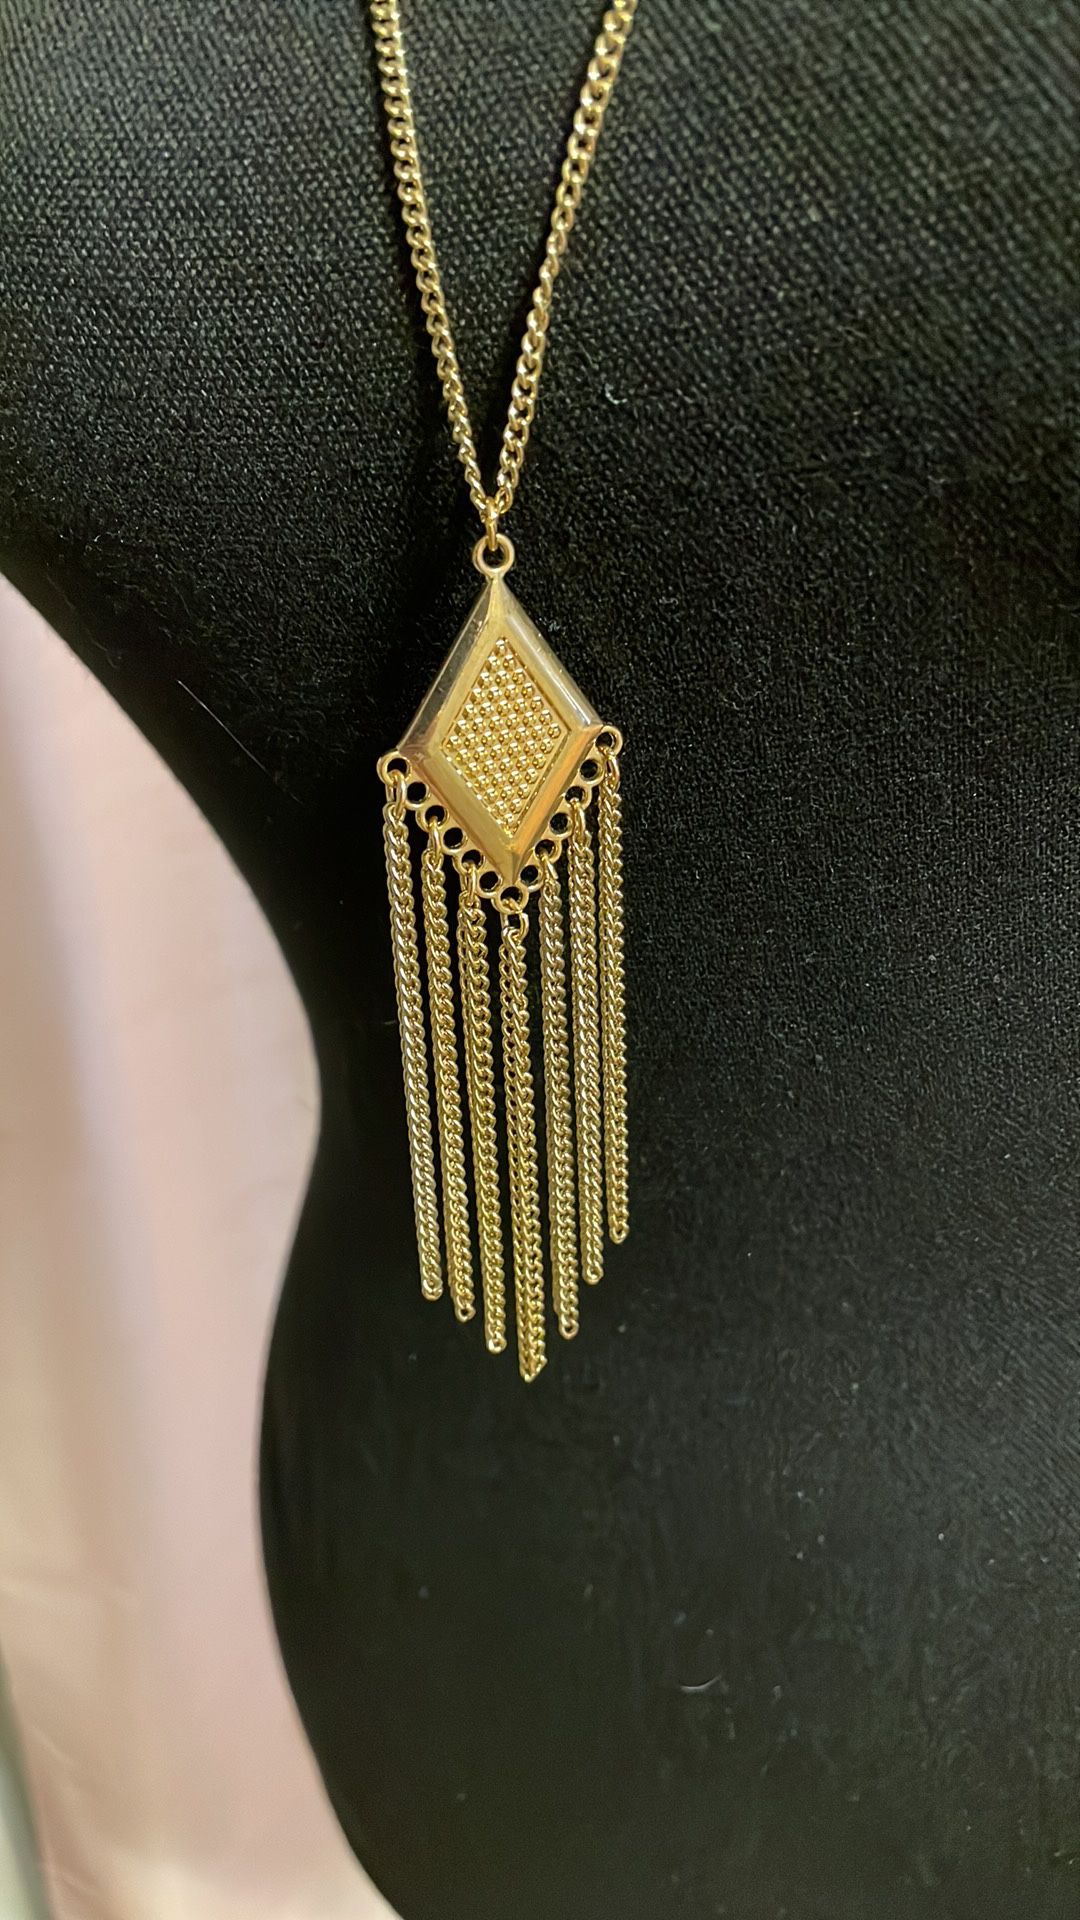 🌸🌸Boho 60s/70s Gold-toned Necklace 🌸🌸